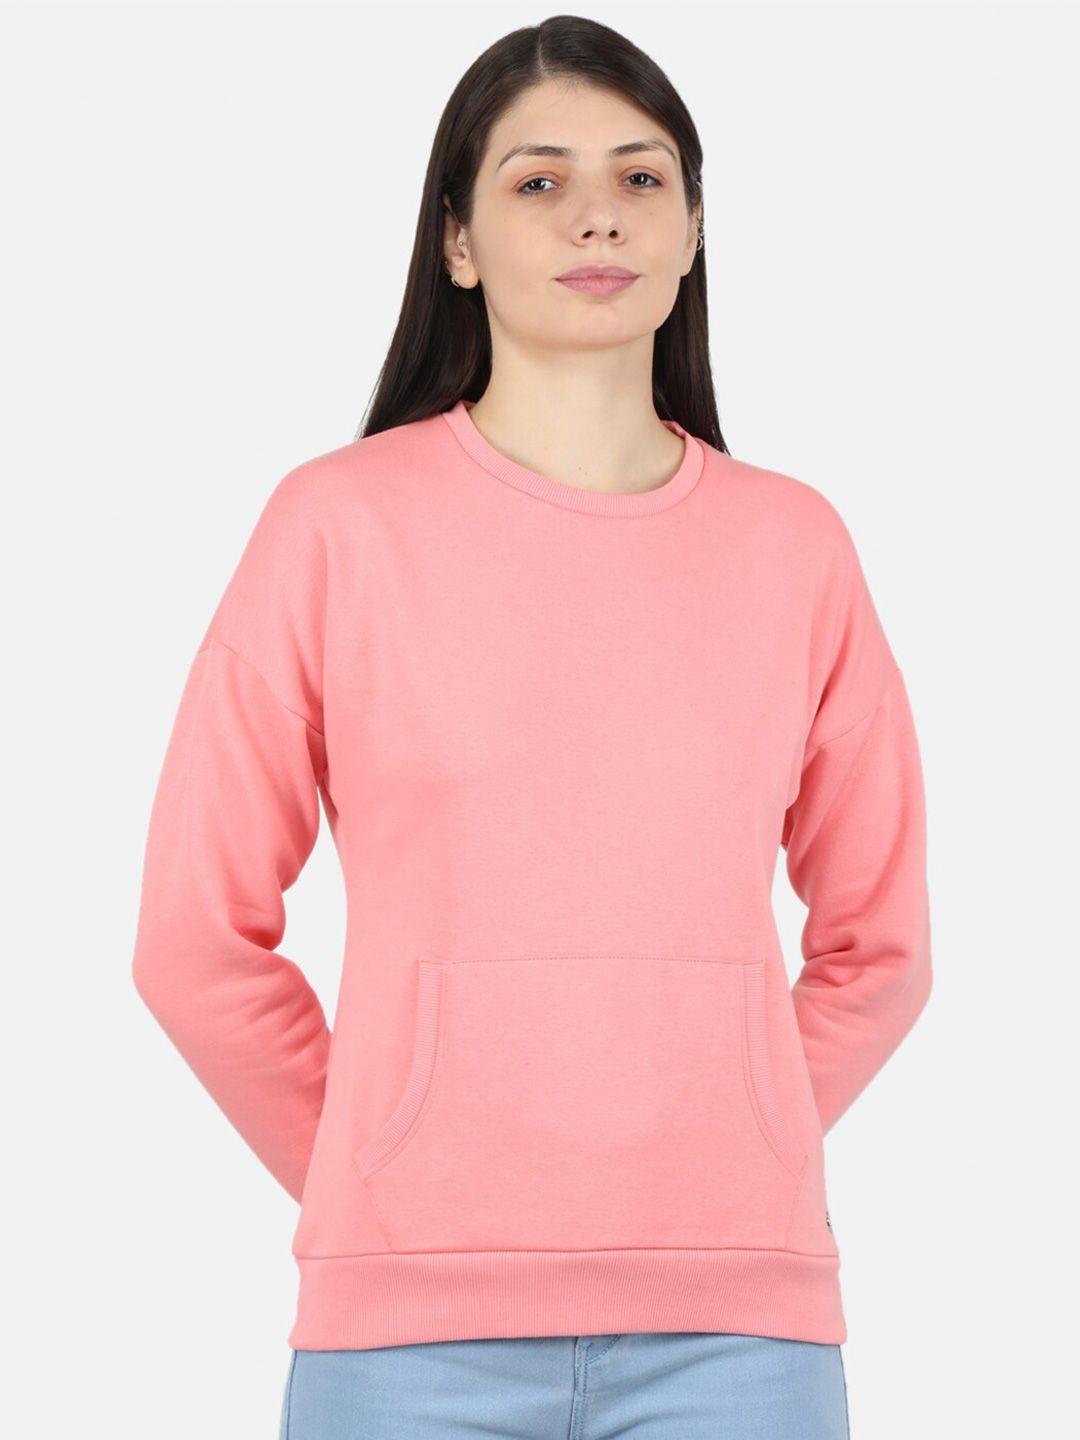 monte-carlo-women-pink-sweatshirt